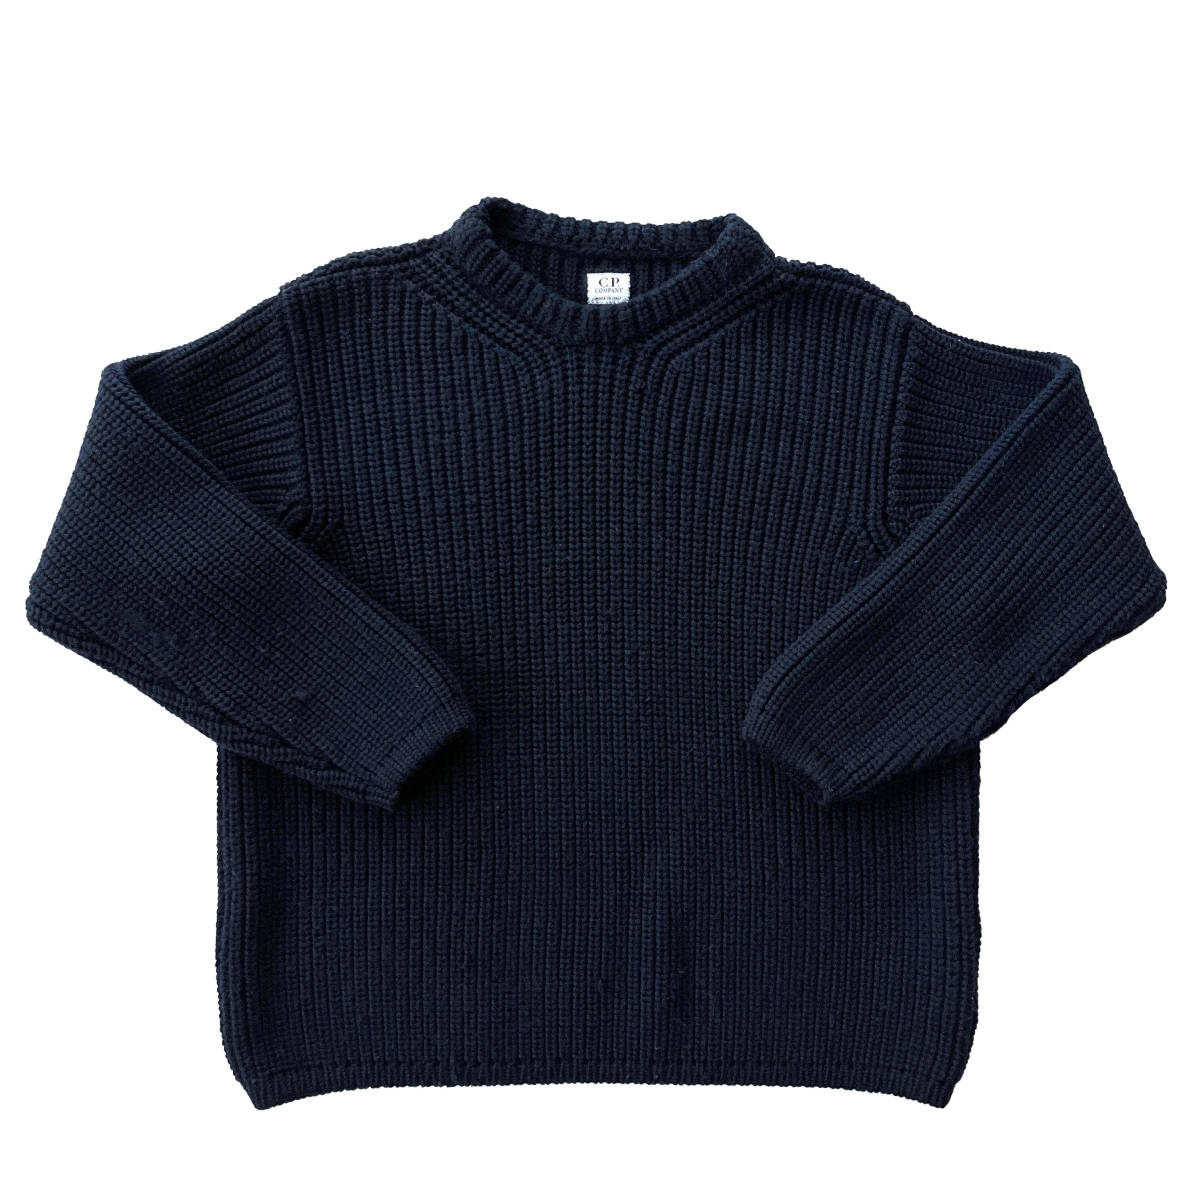 [Vintage]C.P.COMPANY Fisherman sweater navy Romeo Gigli Romeo * Gigli STONE ISLAND Stone Islay ndo1997A/W